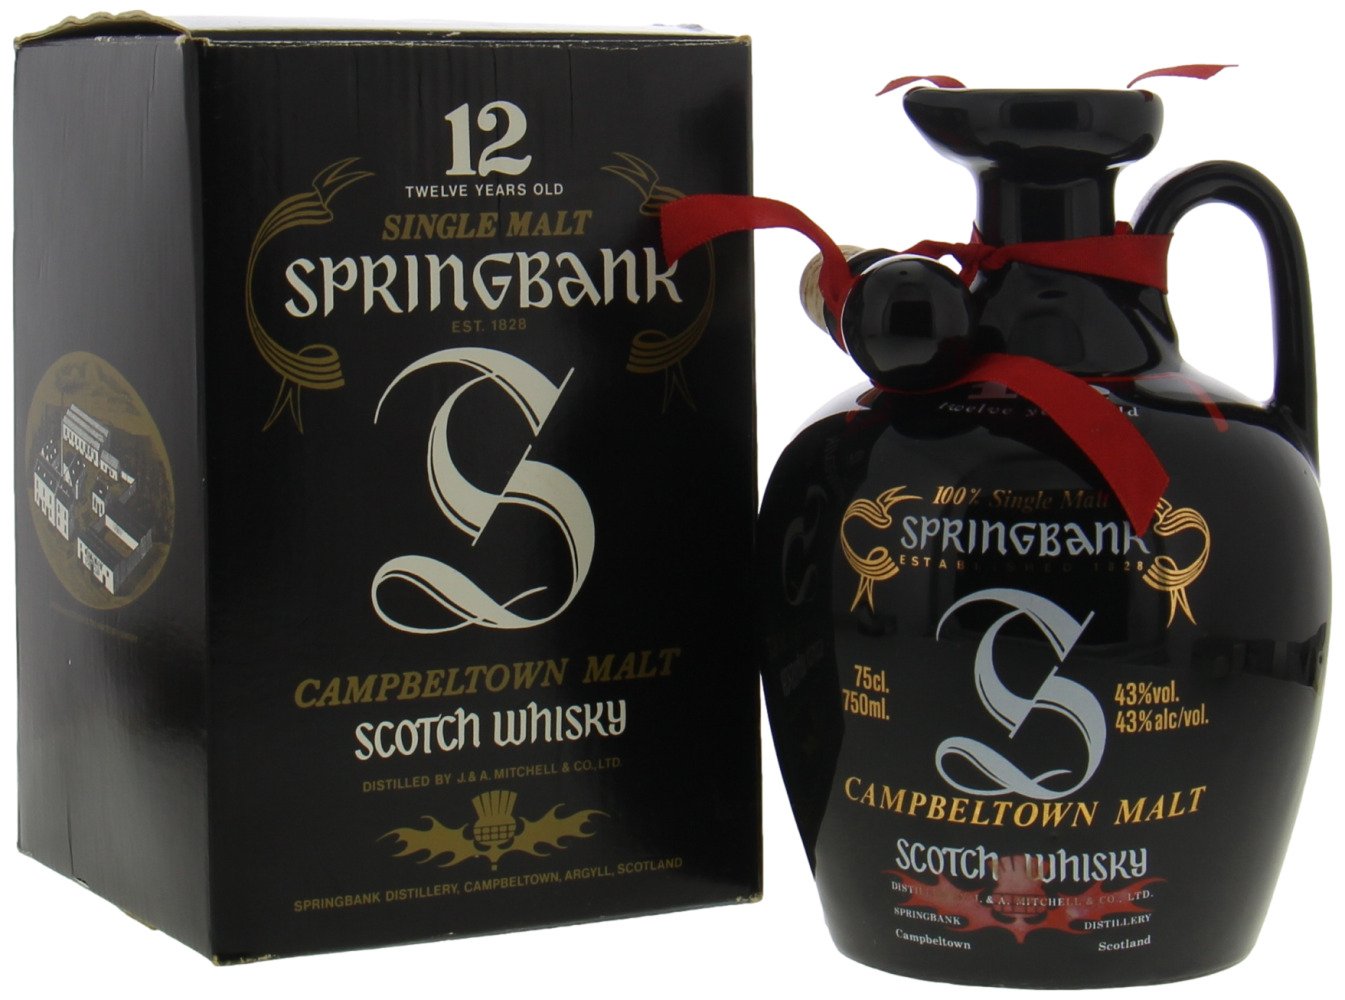 Springbank - 12 Years Old Label 100% Single Malt Black Ceramic Jug with Corkstopper 43% NV